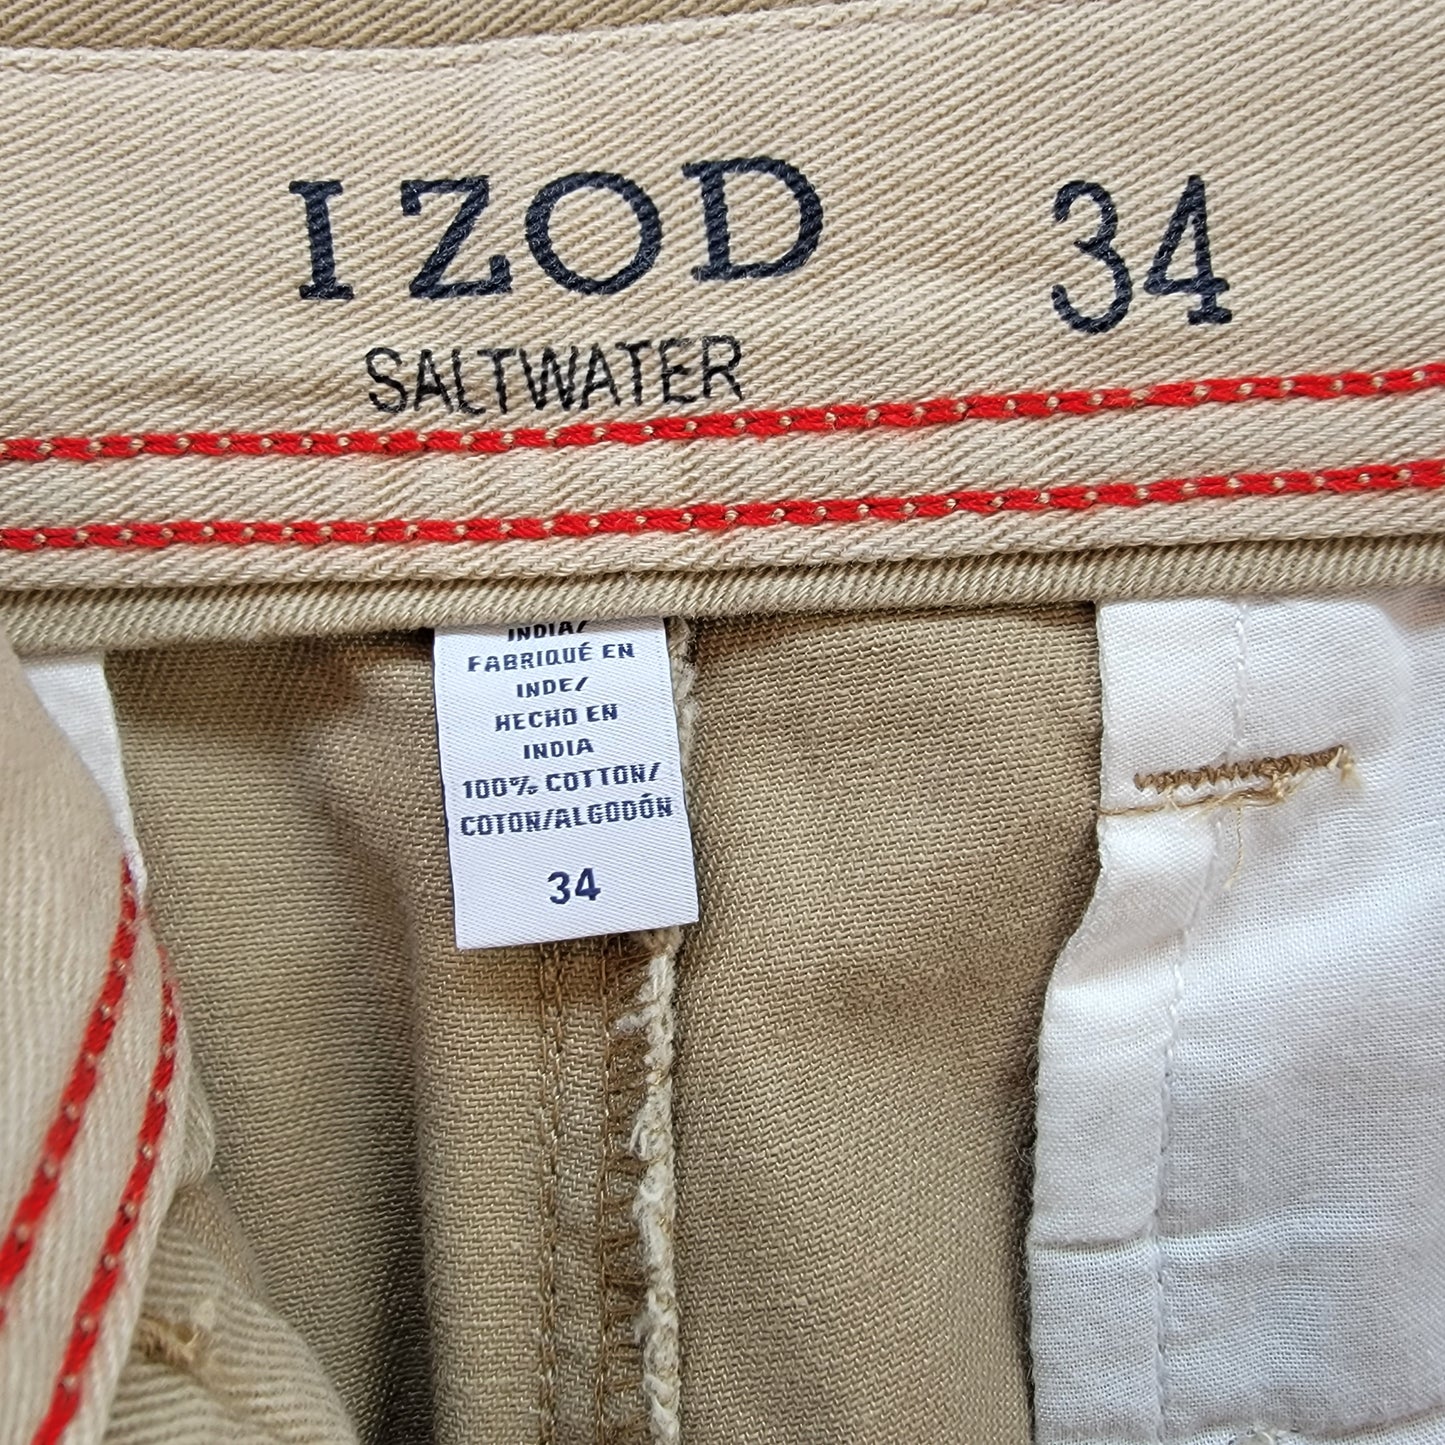 Izod Saltwater Men's Shorts Color Cedarwood Khaki Size 34 Retail $48